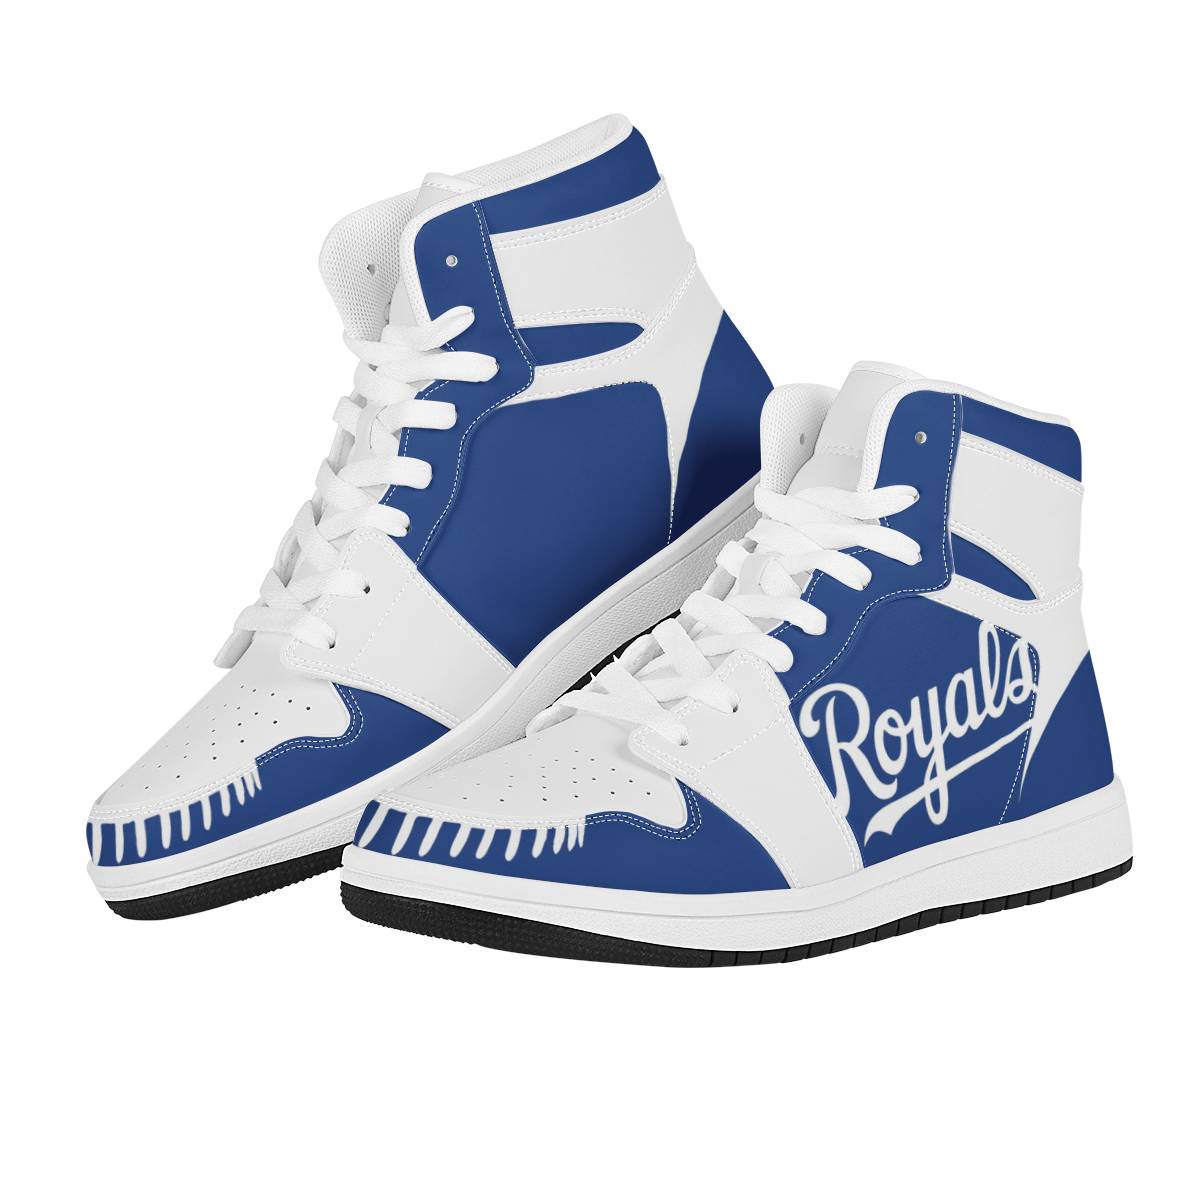 Men's Kansas City Royals High Top Leather AJ1 Sneakers 003